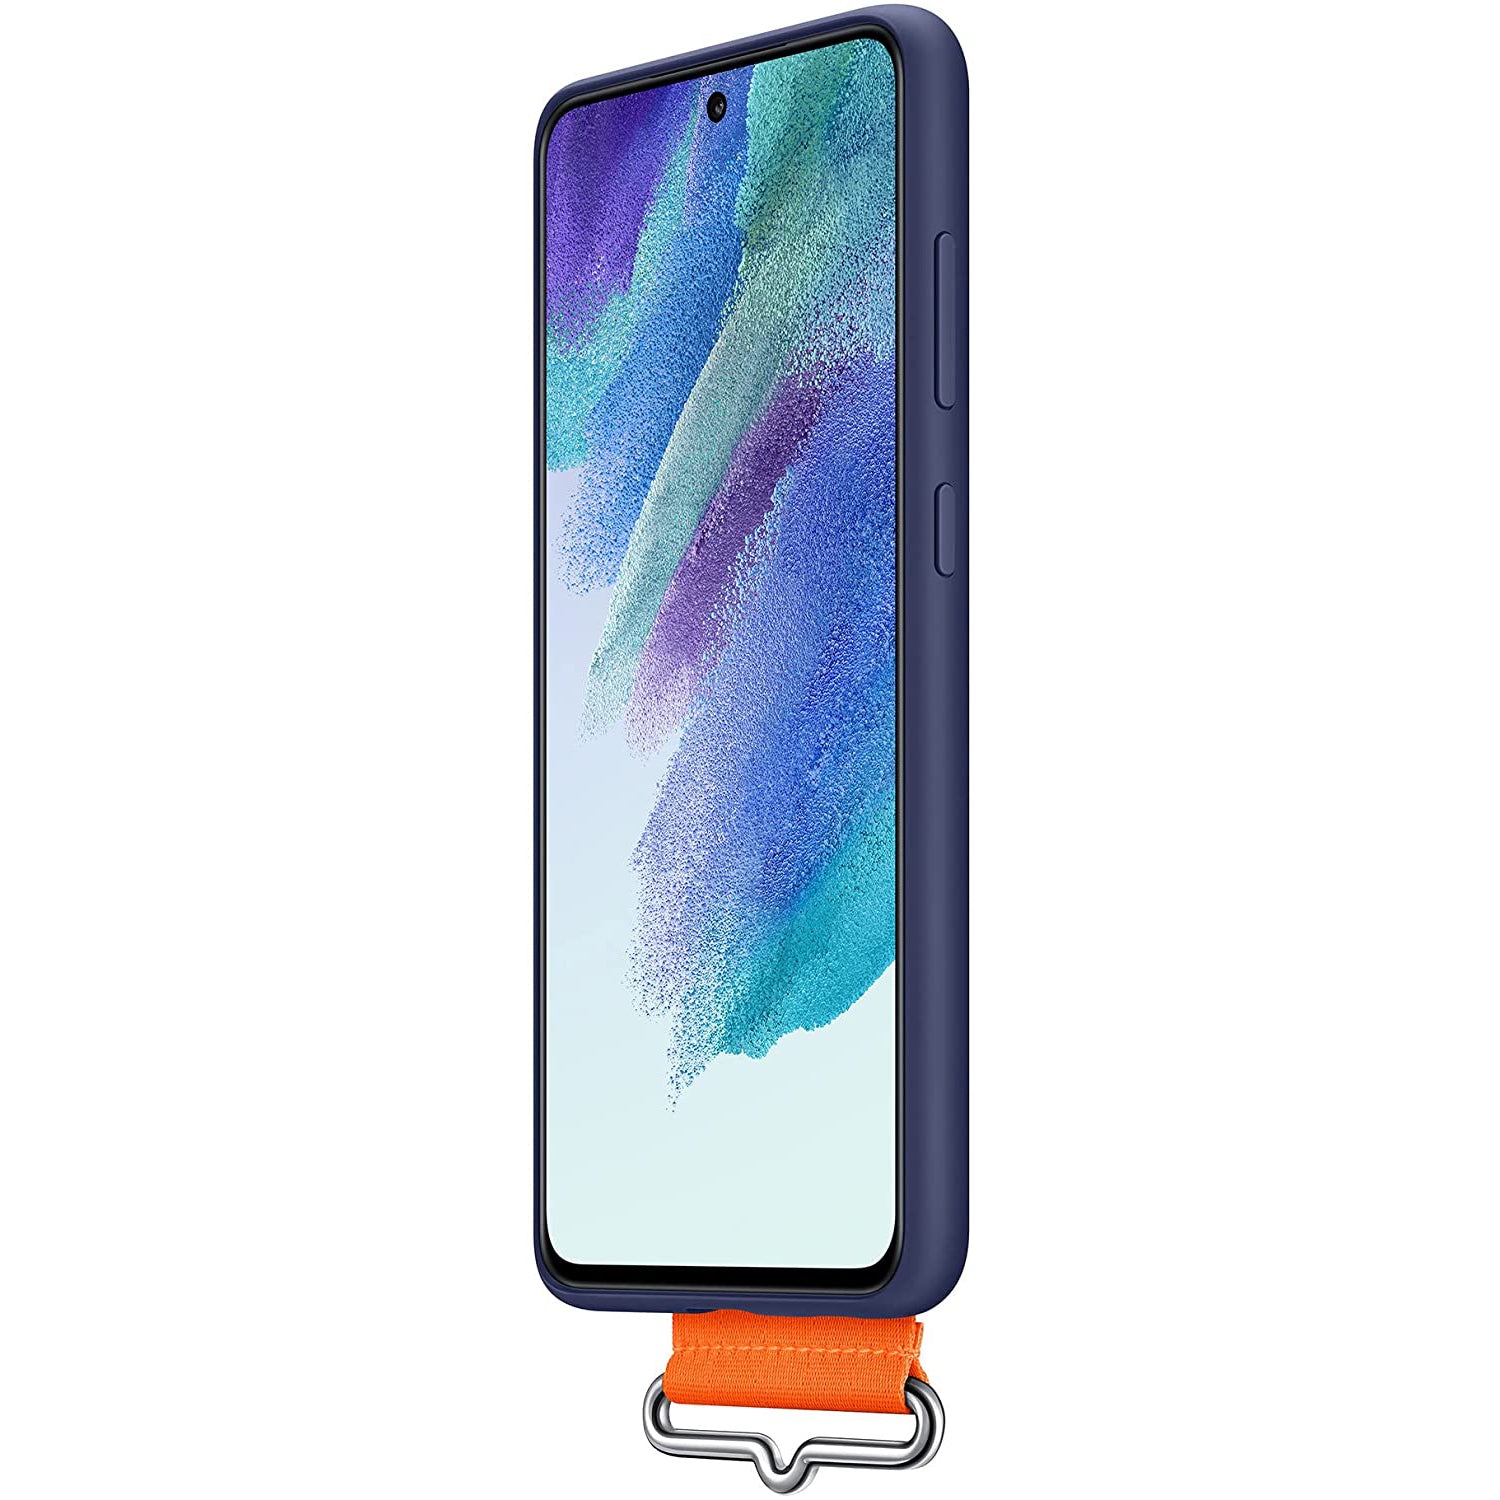 Schutzhülle Samsung Silicone Cover Strap für Galaxy S21 FE, Dunkelblau